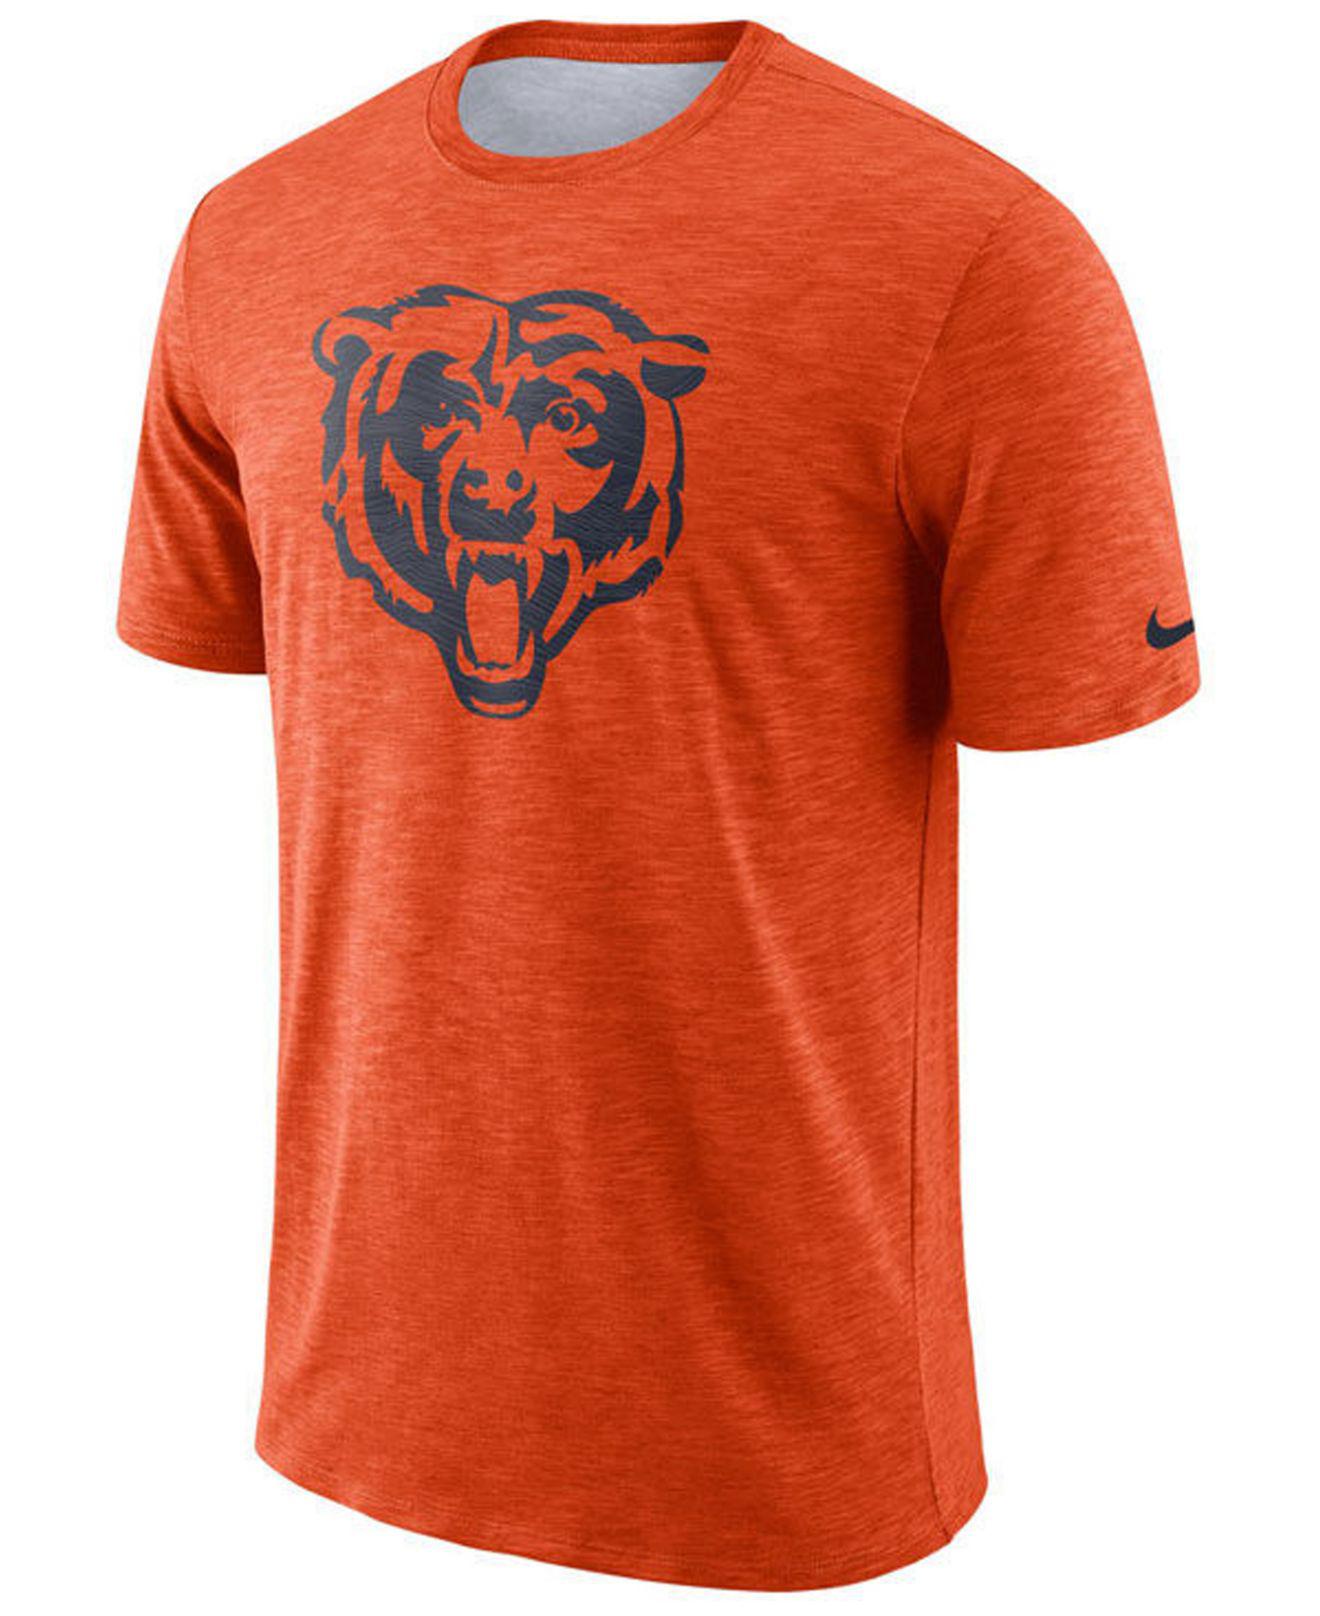 Nike Chicago Bears Nfl Sideline Dri-fit Cotton Slub T-shirt in ...